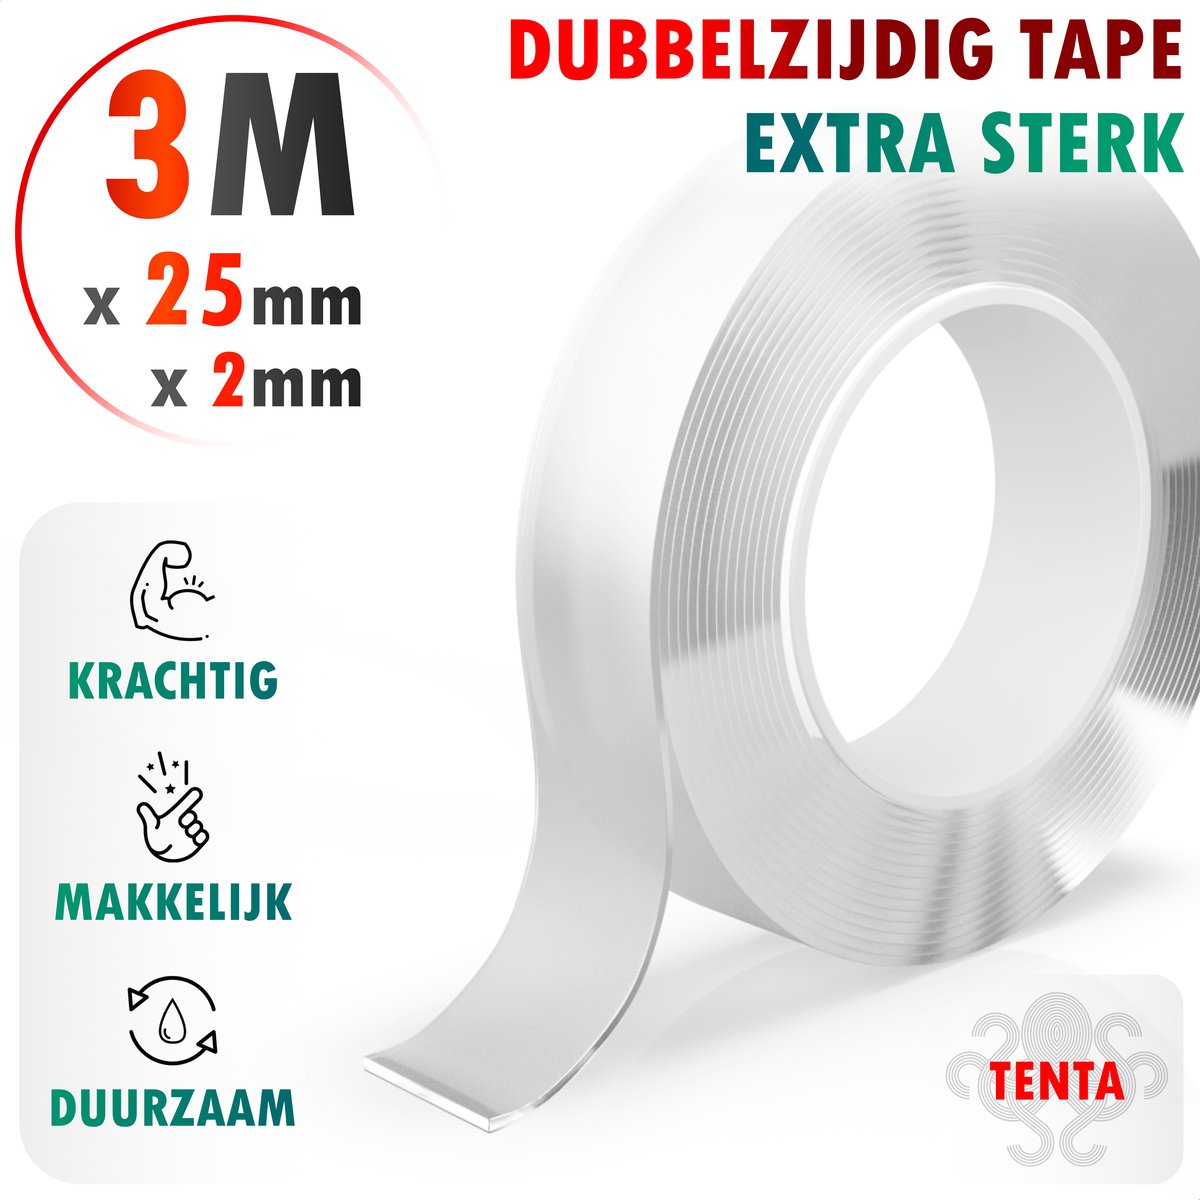 vier keer Lui eigendom TENTA® Dubbelzijdig Tape Extra Sterk - 3m x 25mm x 2mm | bol.com